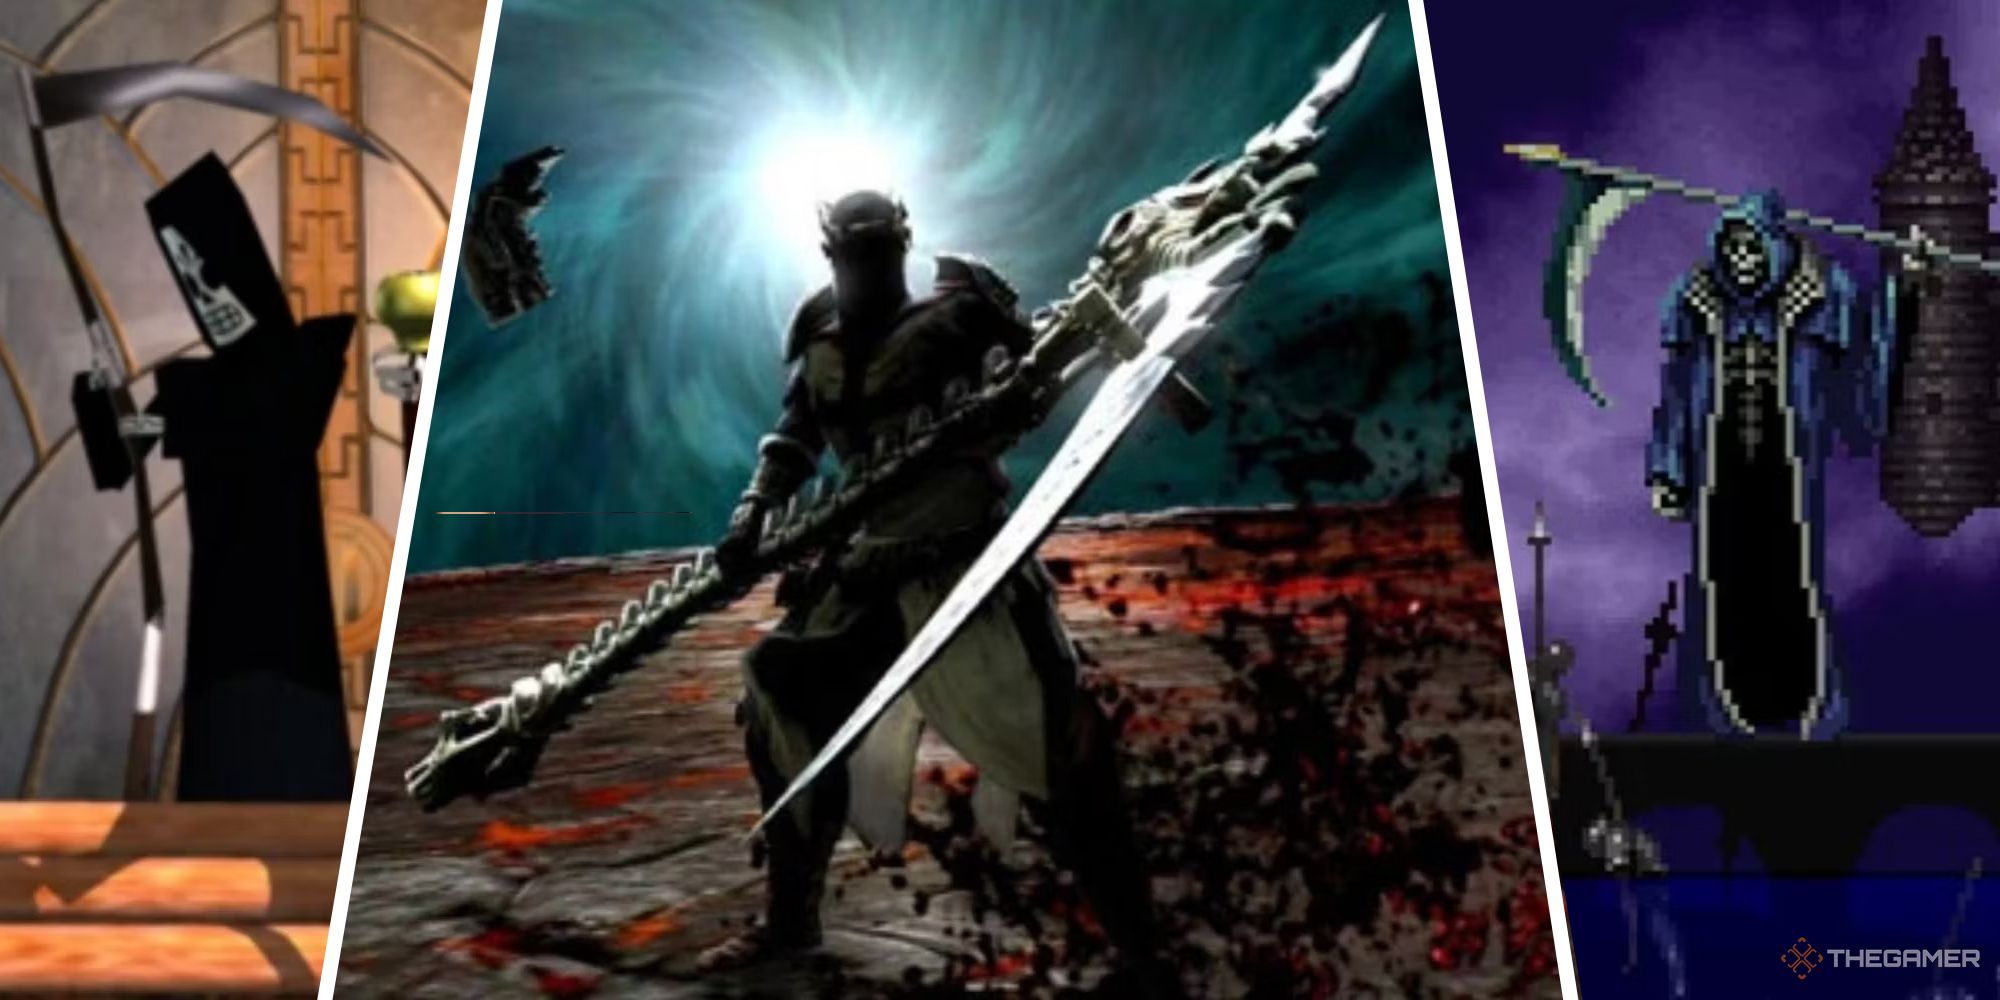 Anime and Video Game Swords - Zelda, Anime Inspired Swords, Anime Mystery  Sets | TRUESWORDS.com